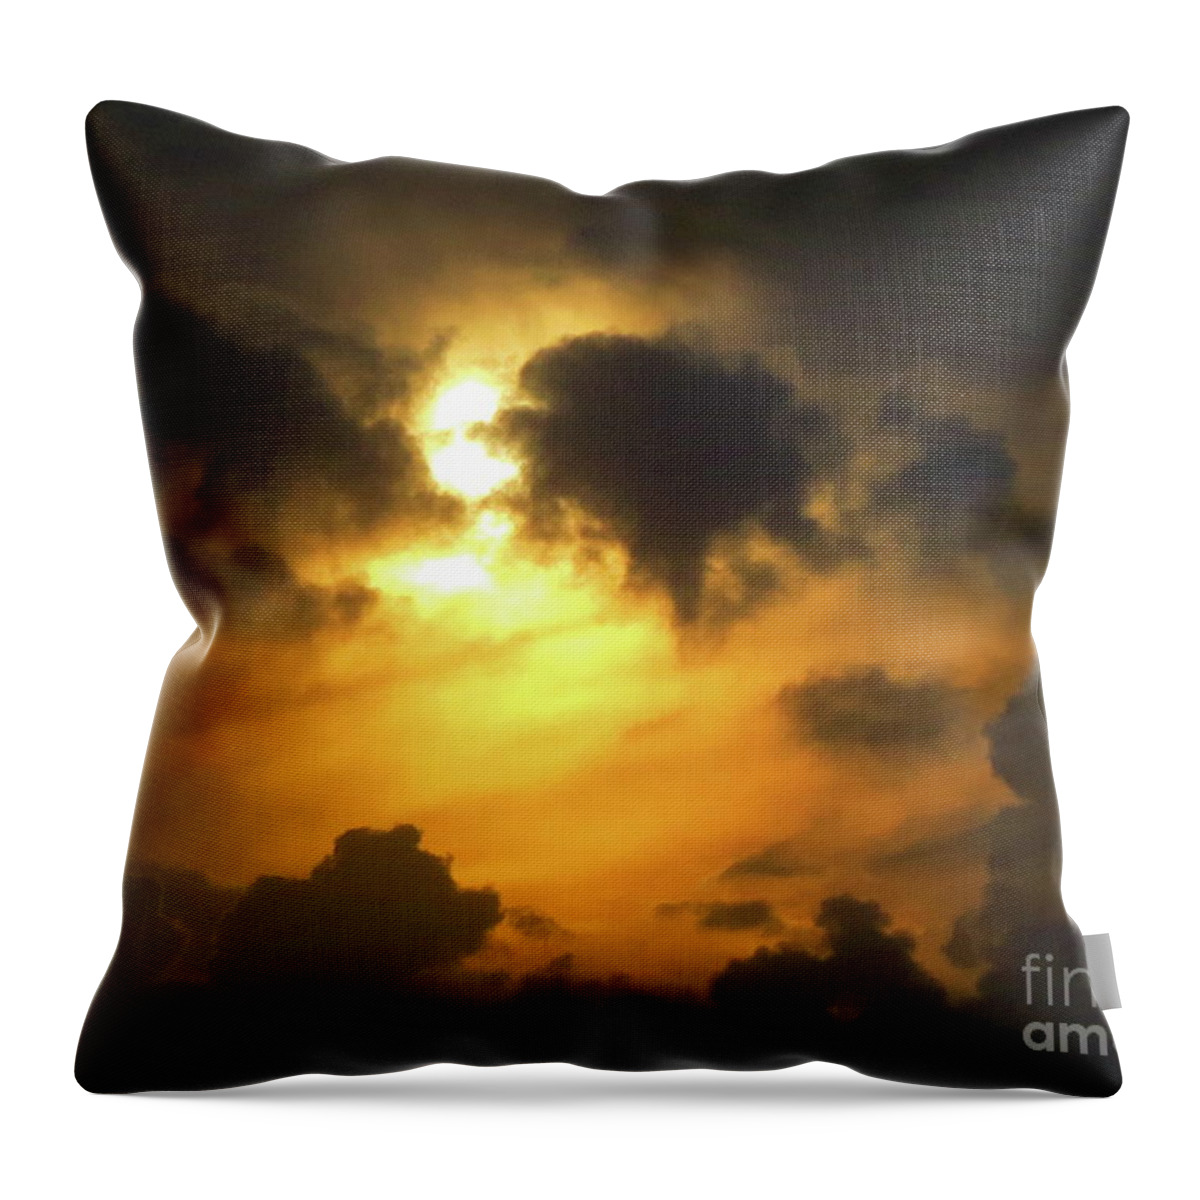 Biblical Florida Sunset Photo Throw Pillow featuring the photograph Biblical Sunset by Robert Birkenes